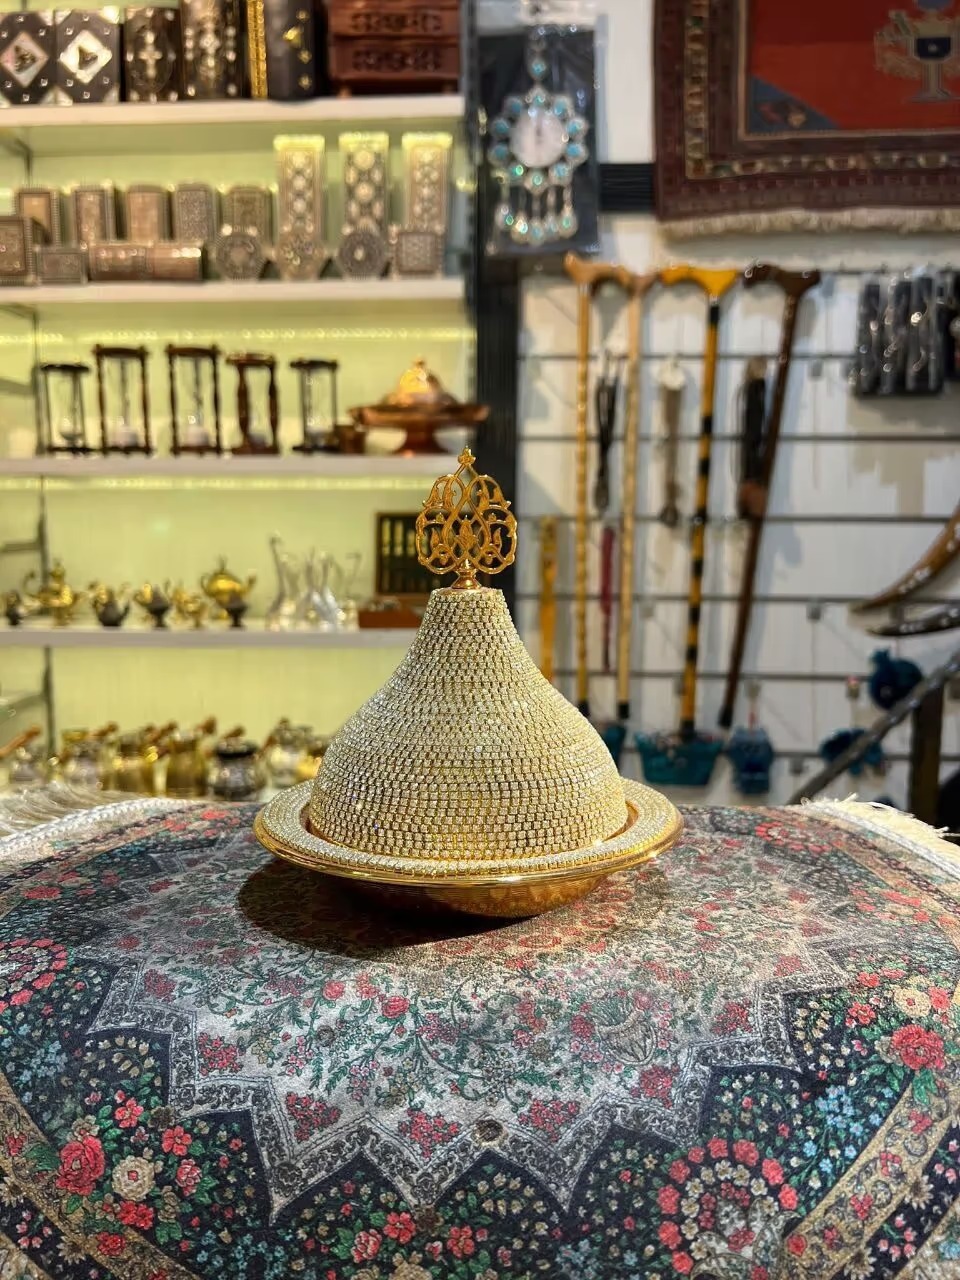 Turkish Sugar Bowl, Turkish Handmade Delight Bowl, Colorful Stoned Crystals, Golden Home Decoration Vintage